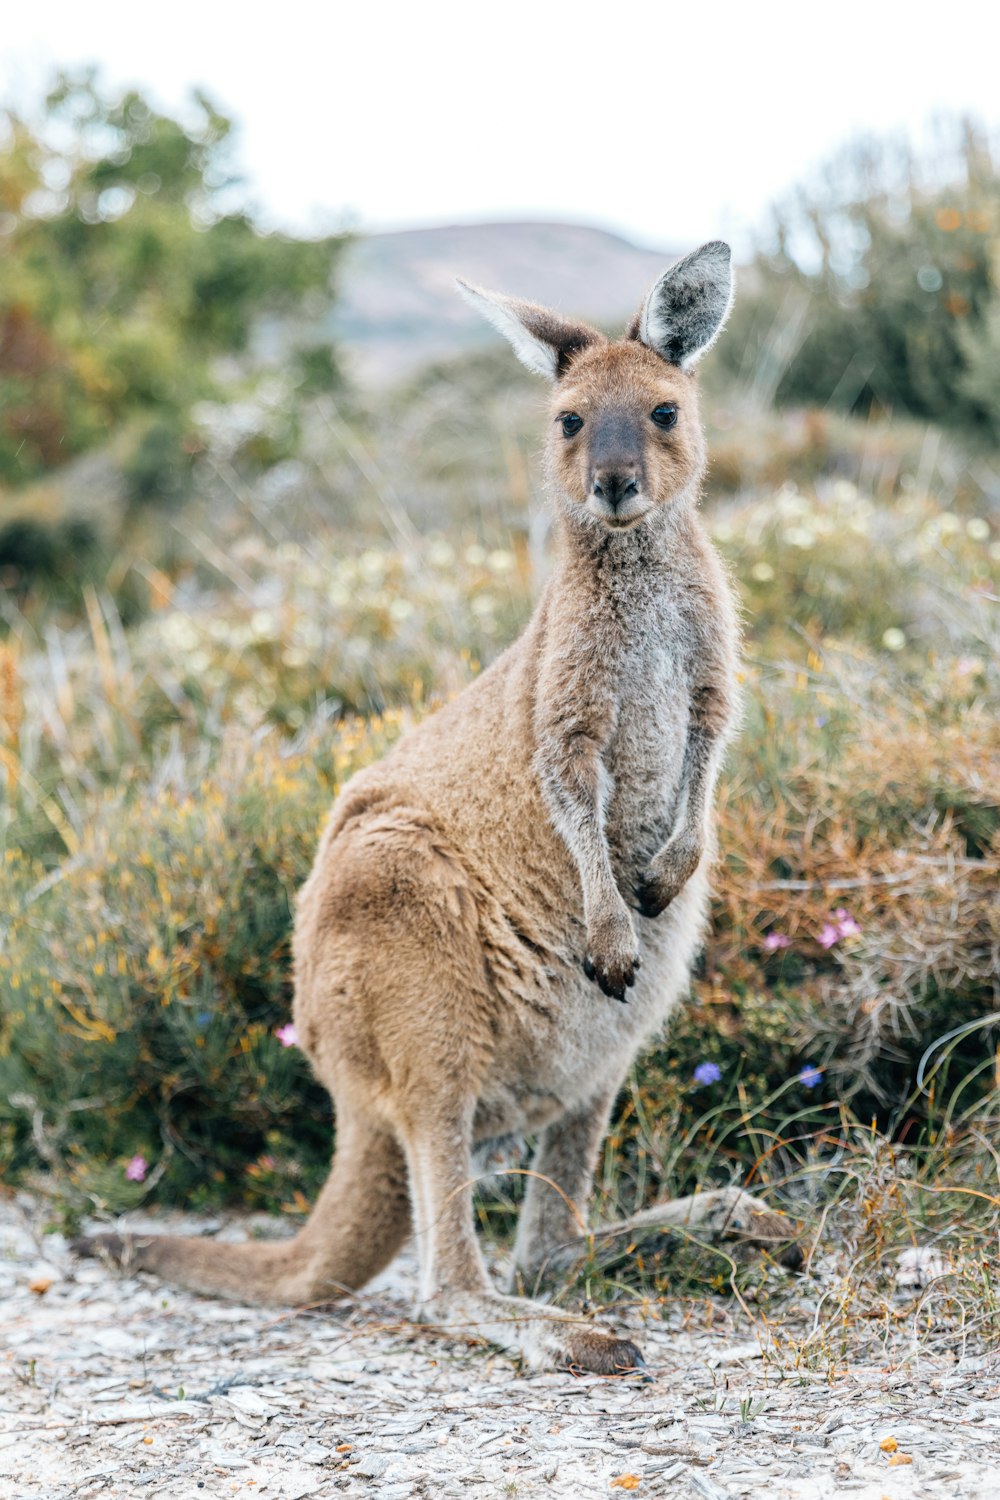 a kangaroo standing on its hind legs